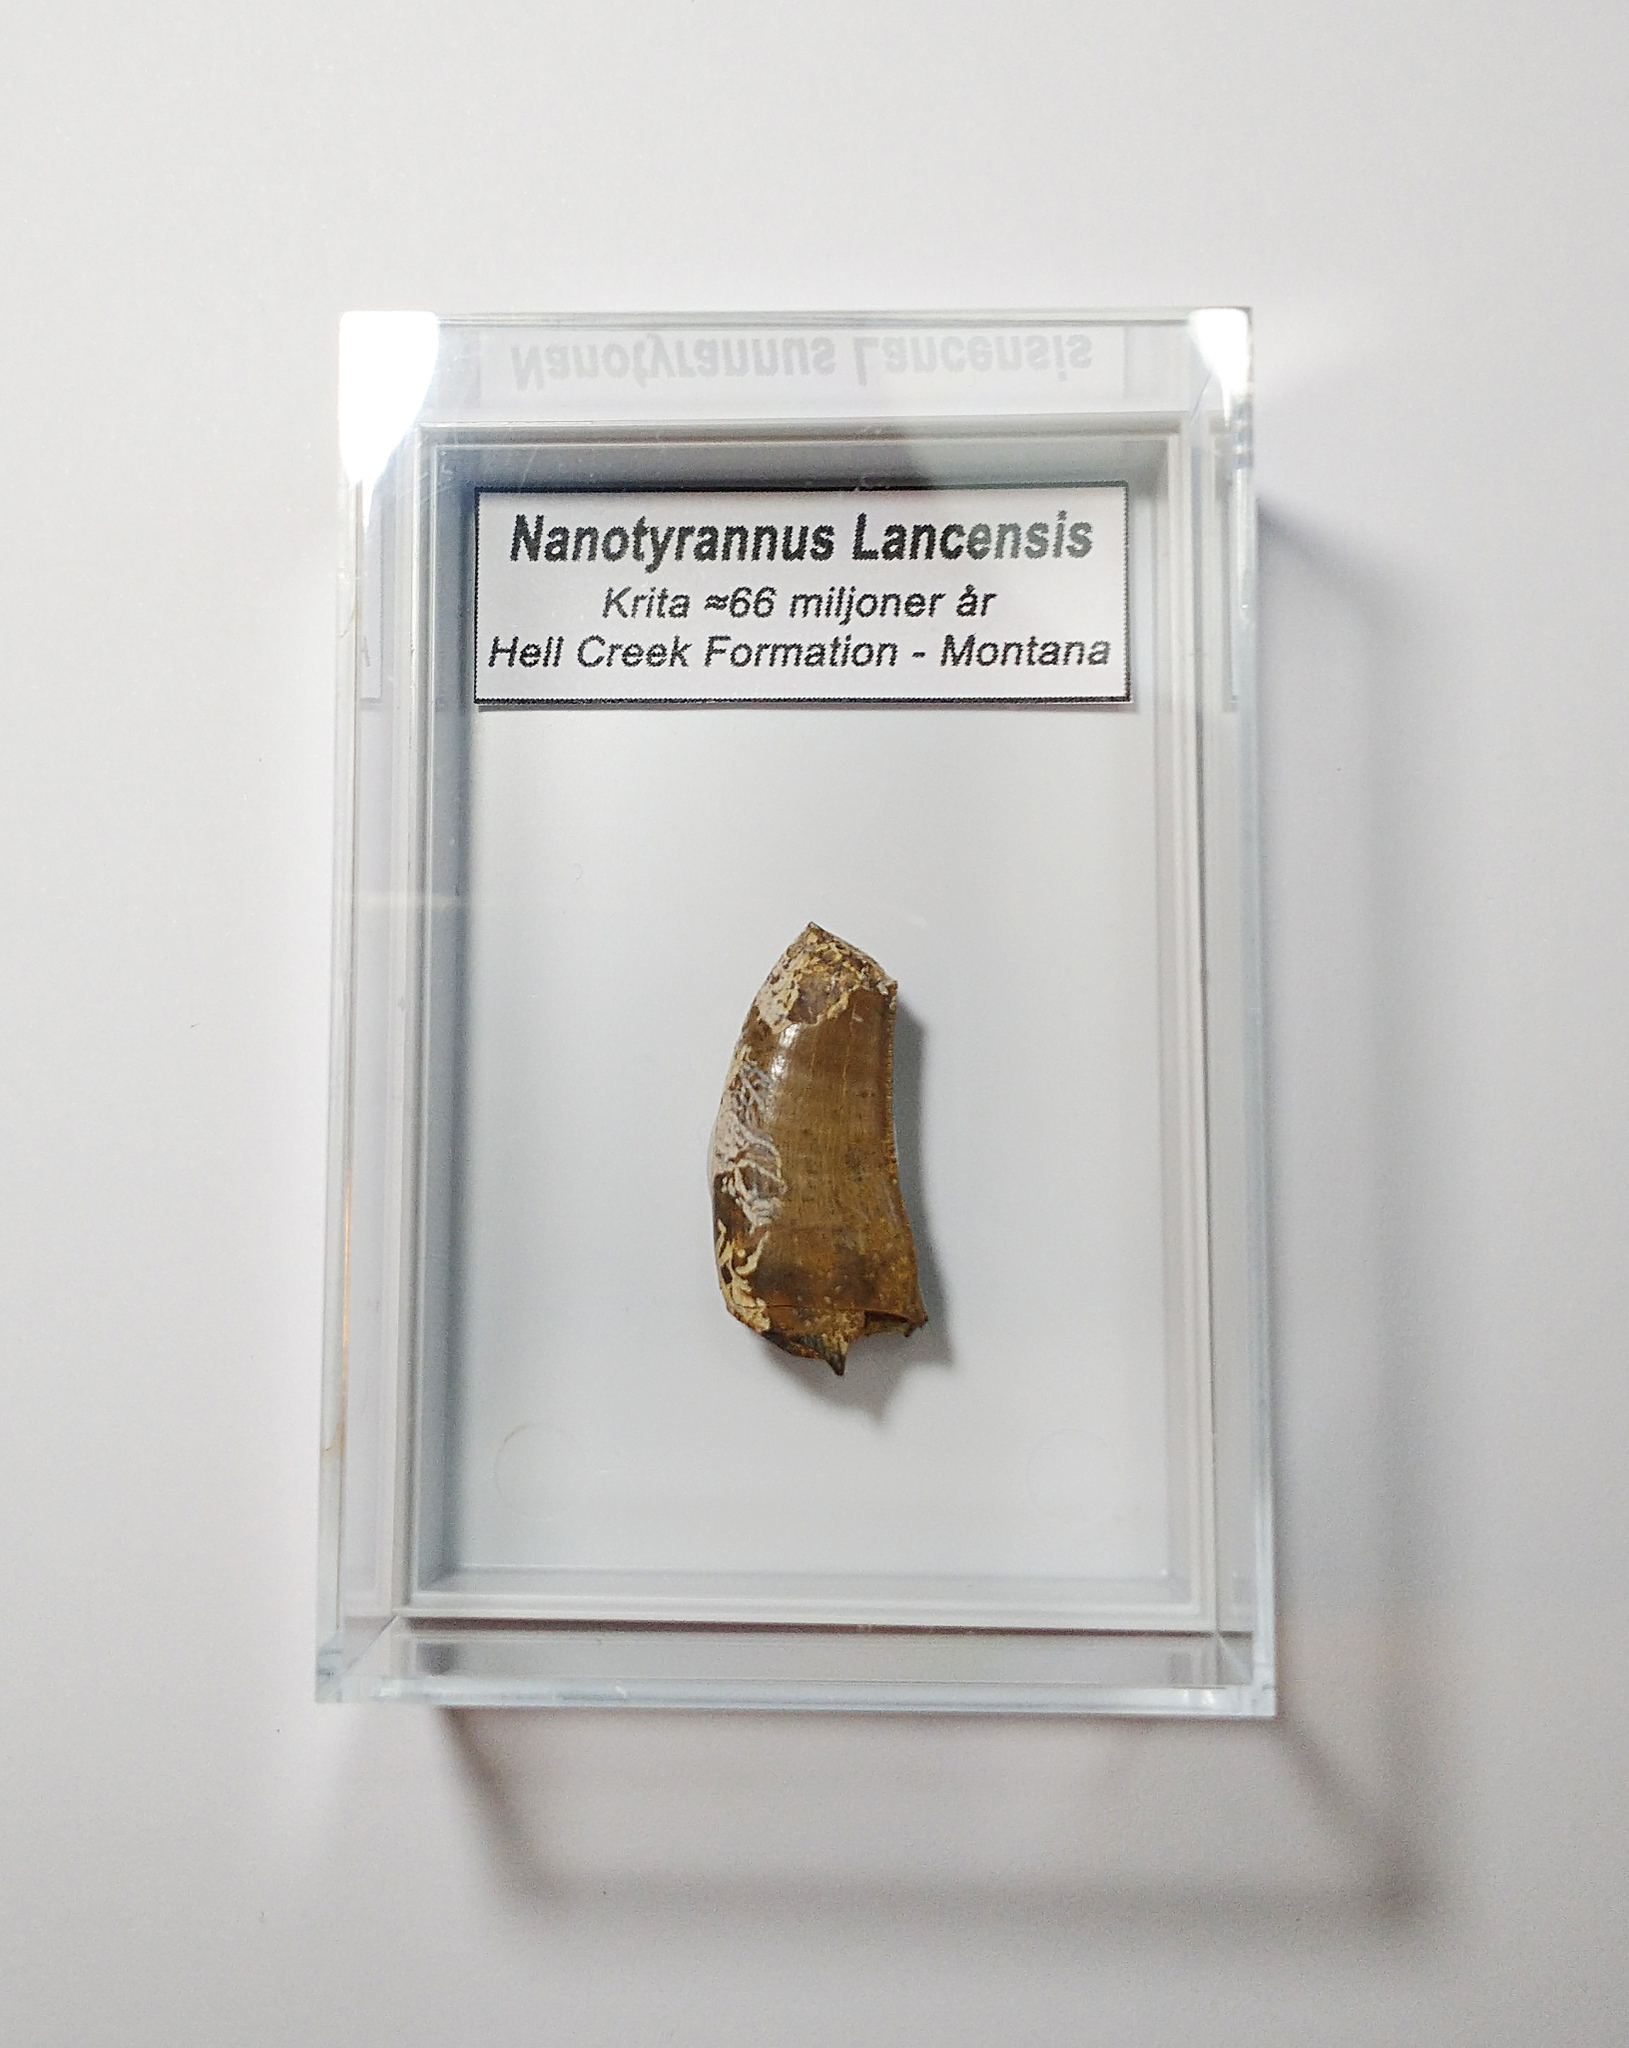 Nanotyrannus Lancensis tand